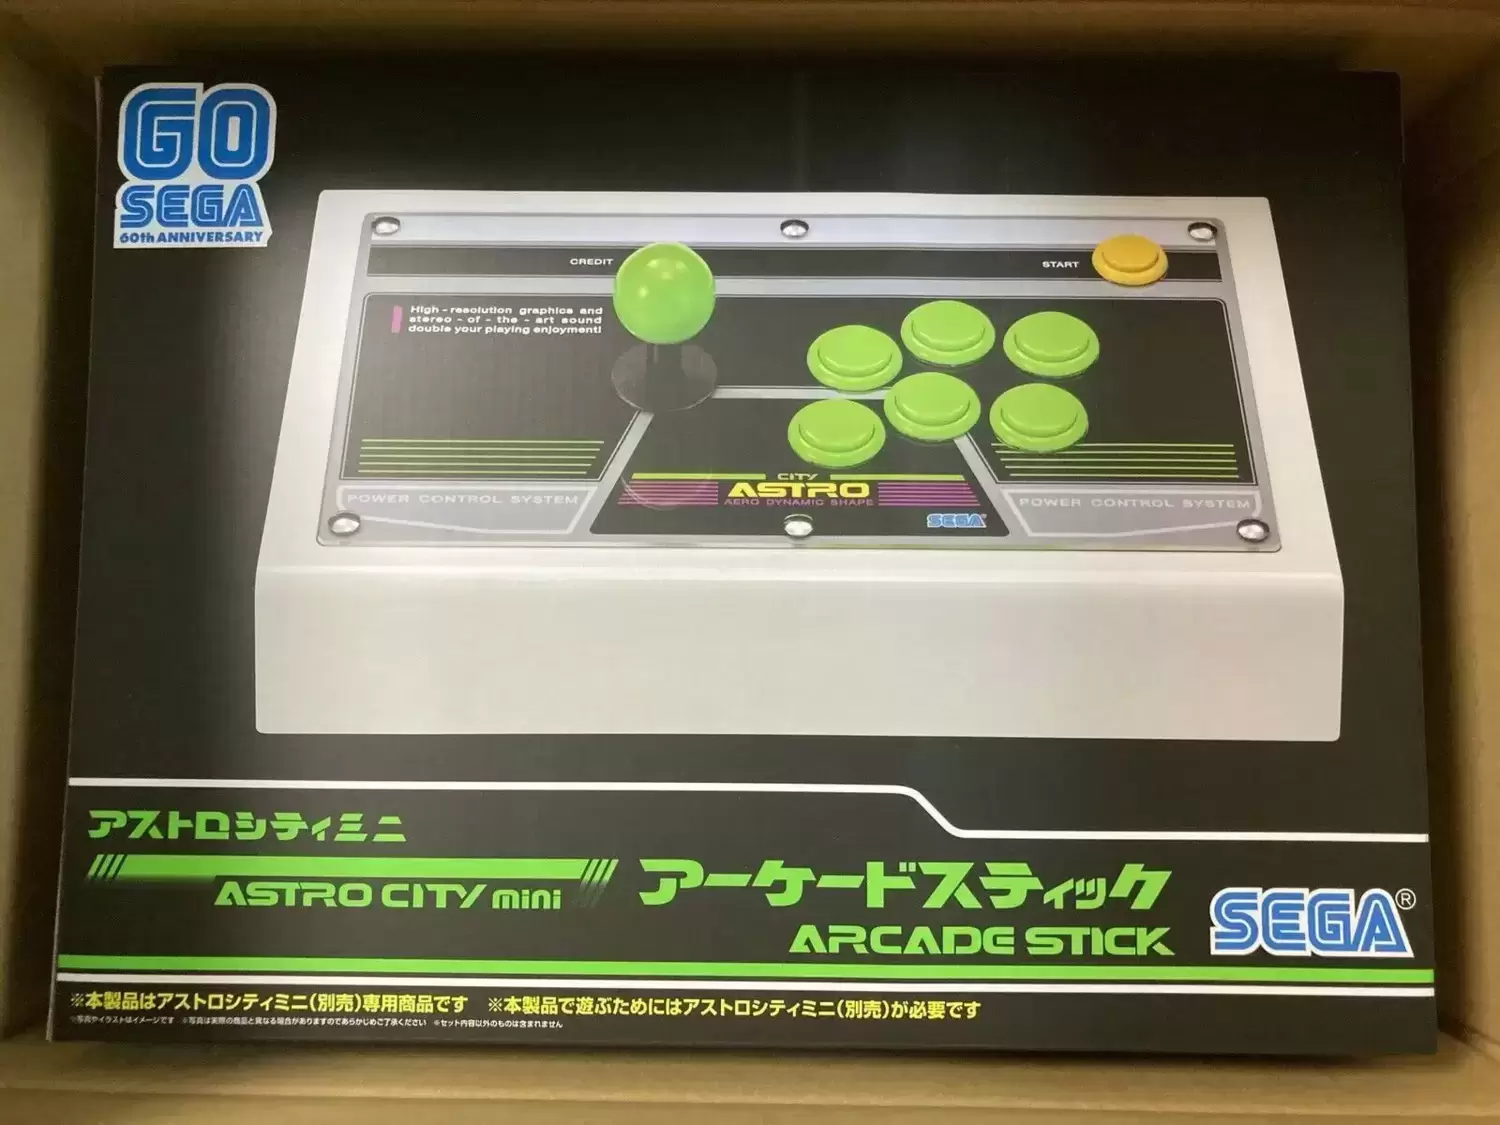 Arcade Stick - Sega Astro City Mini Japan Edition Arcade Stick